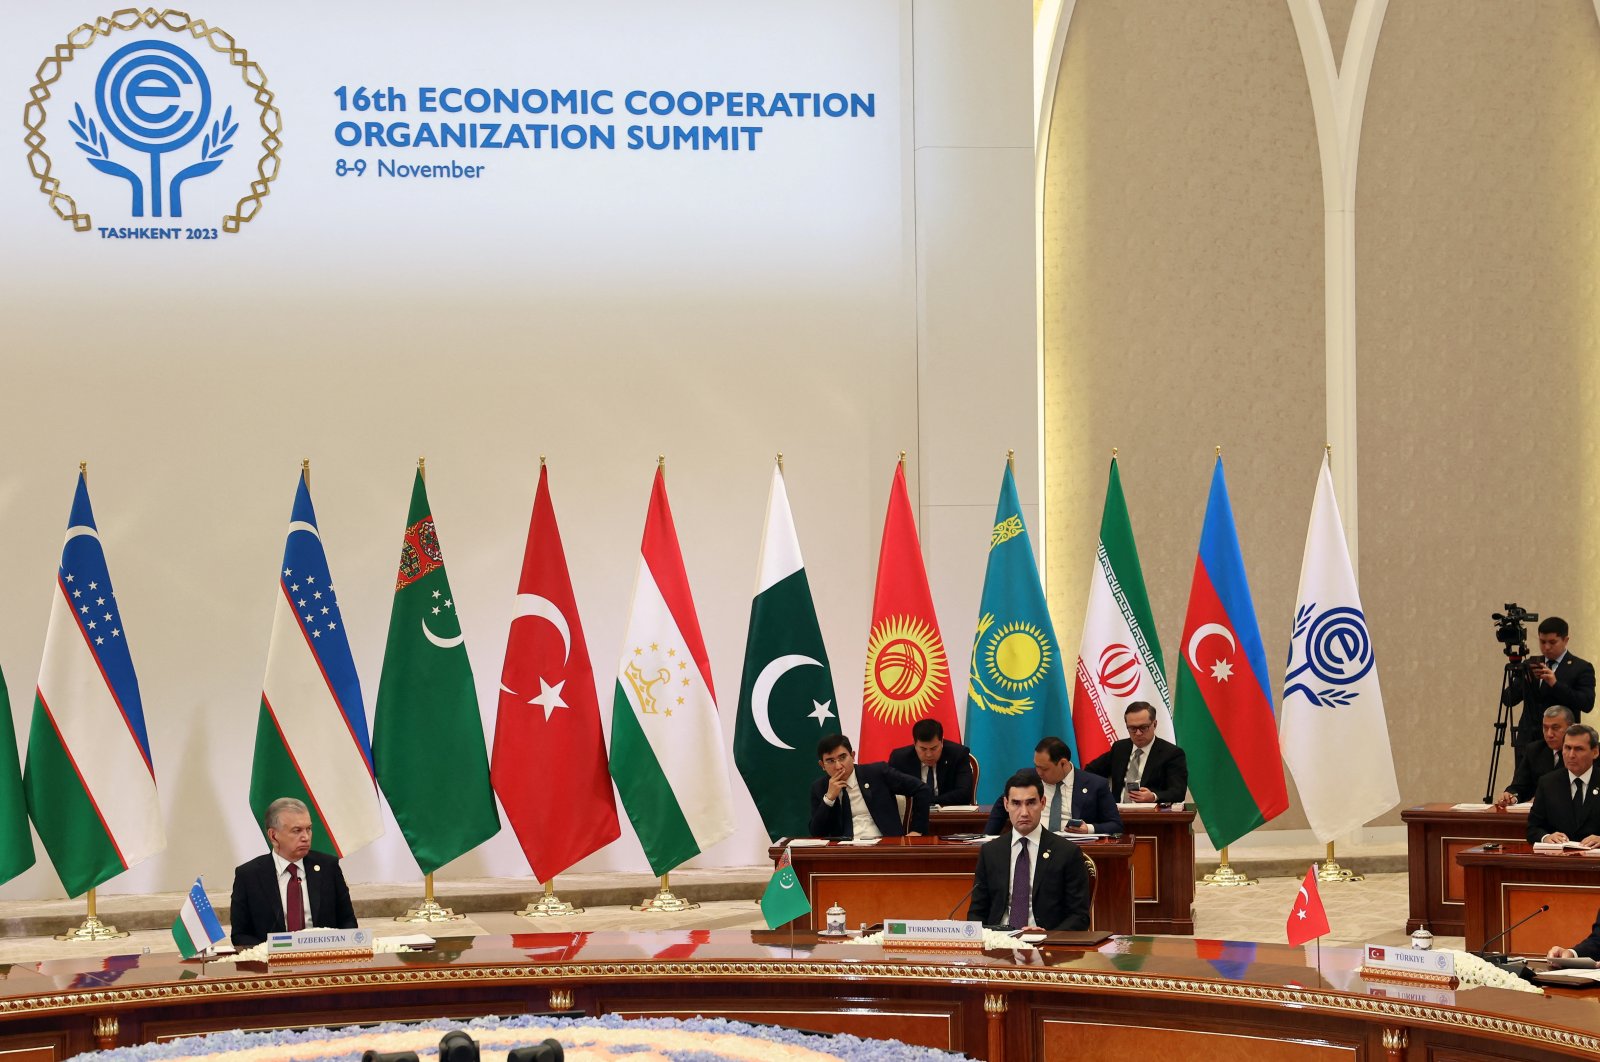 President Recep Tayyip Erdoğan makes a speech at the 16th Economic Cooperation Organization Summit in Tashkent, Uzbekistan, Nov. 9, 2023. (Reuters Photo)